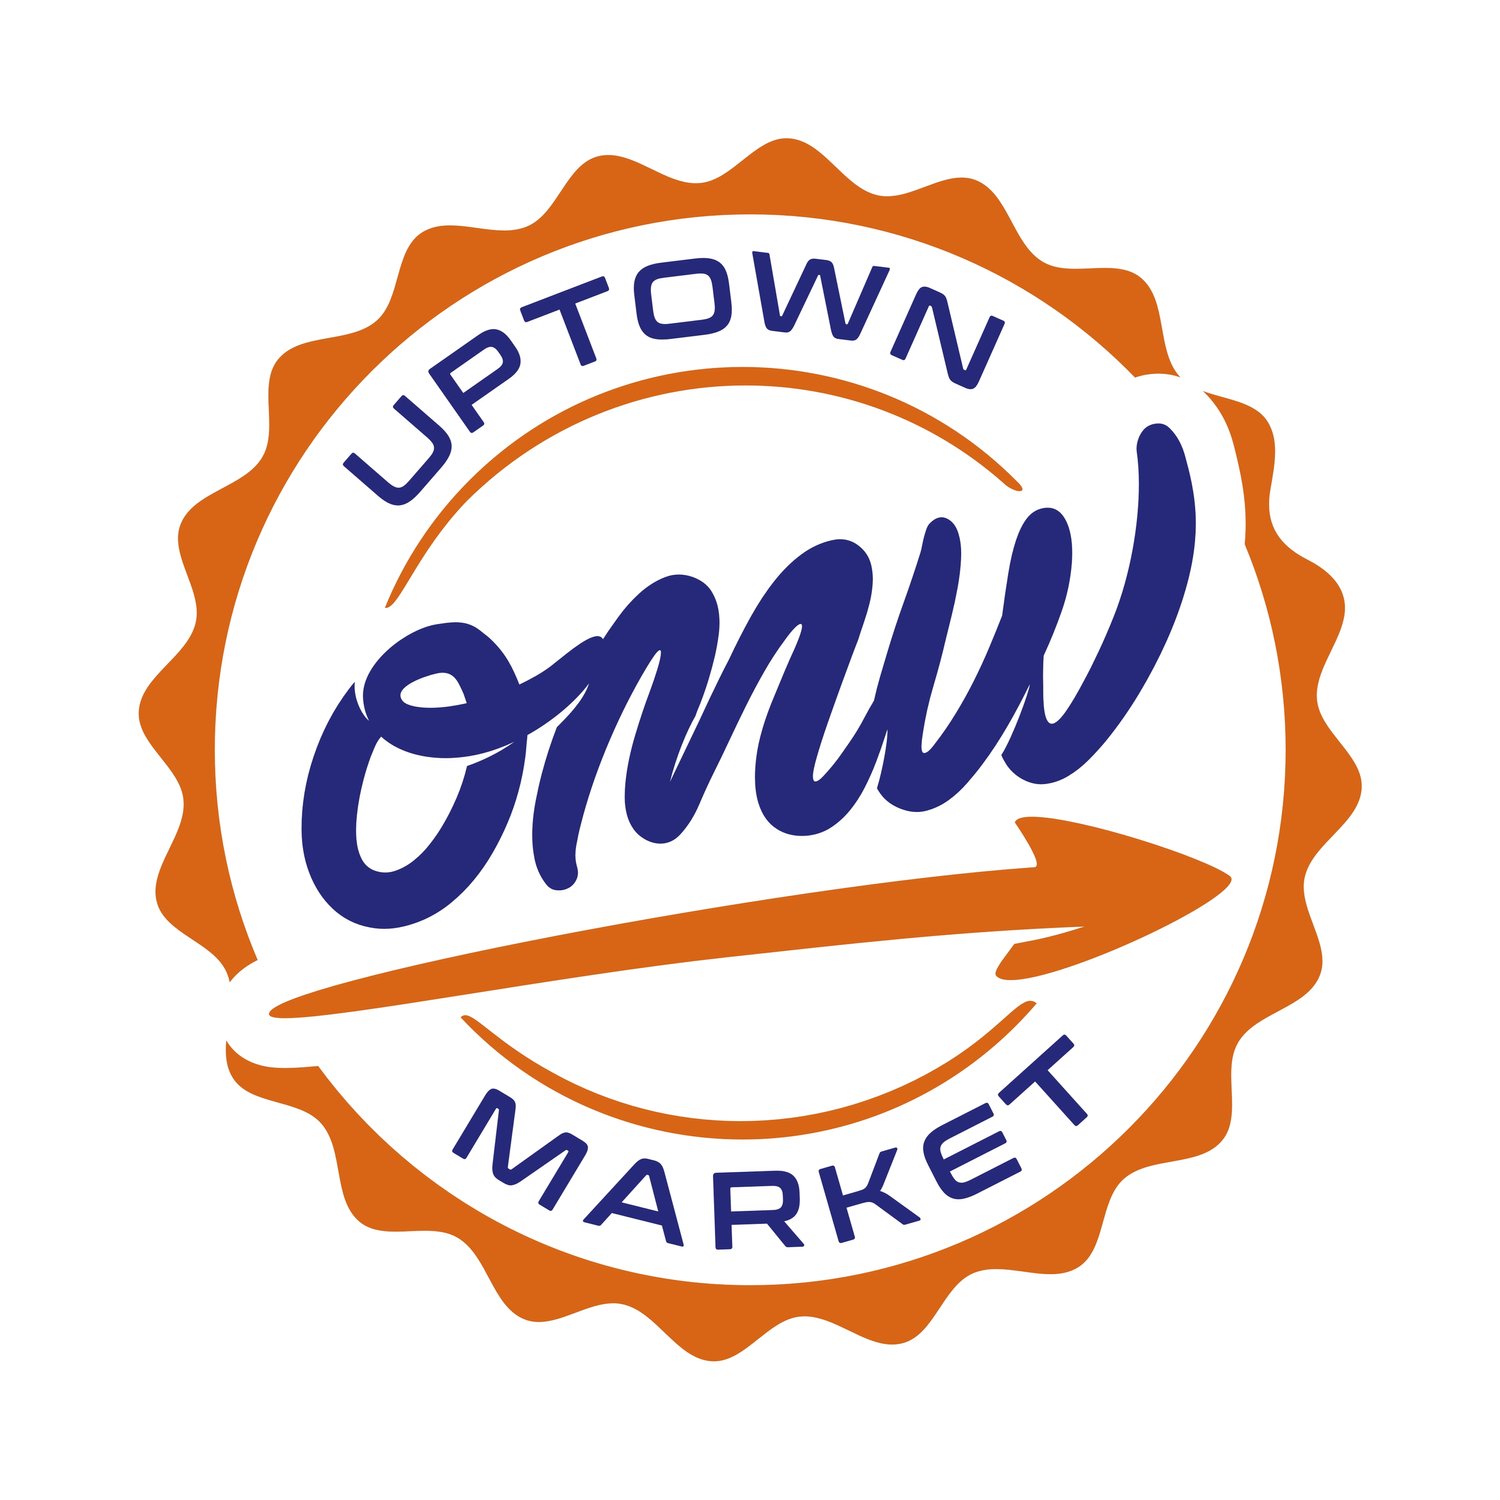 OMW Uptown Market